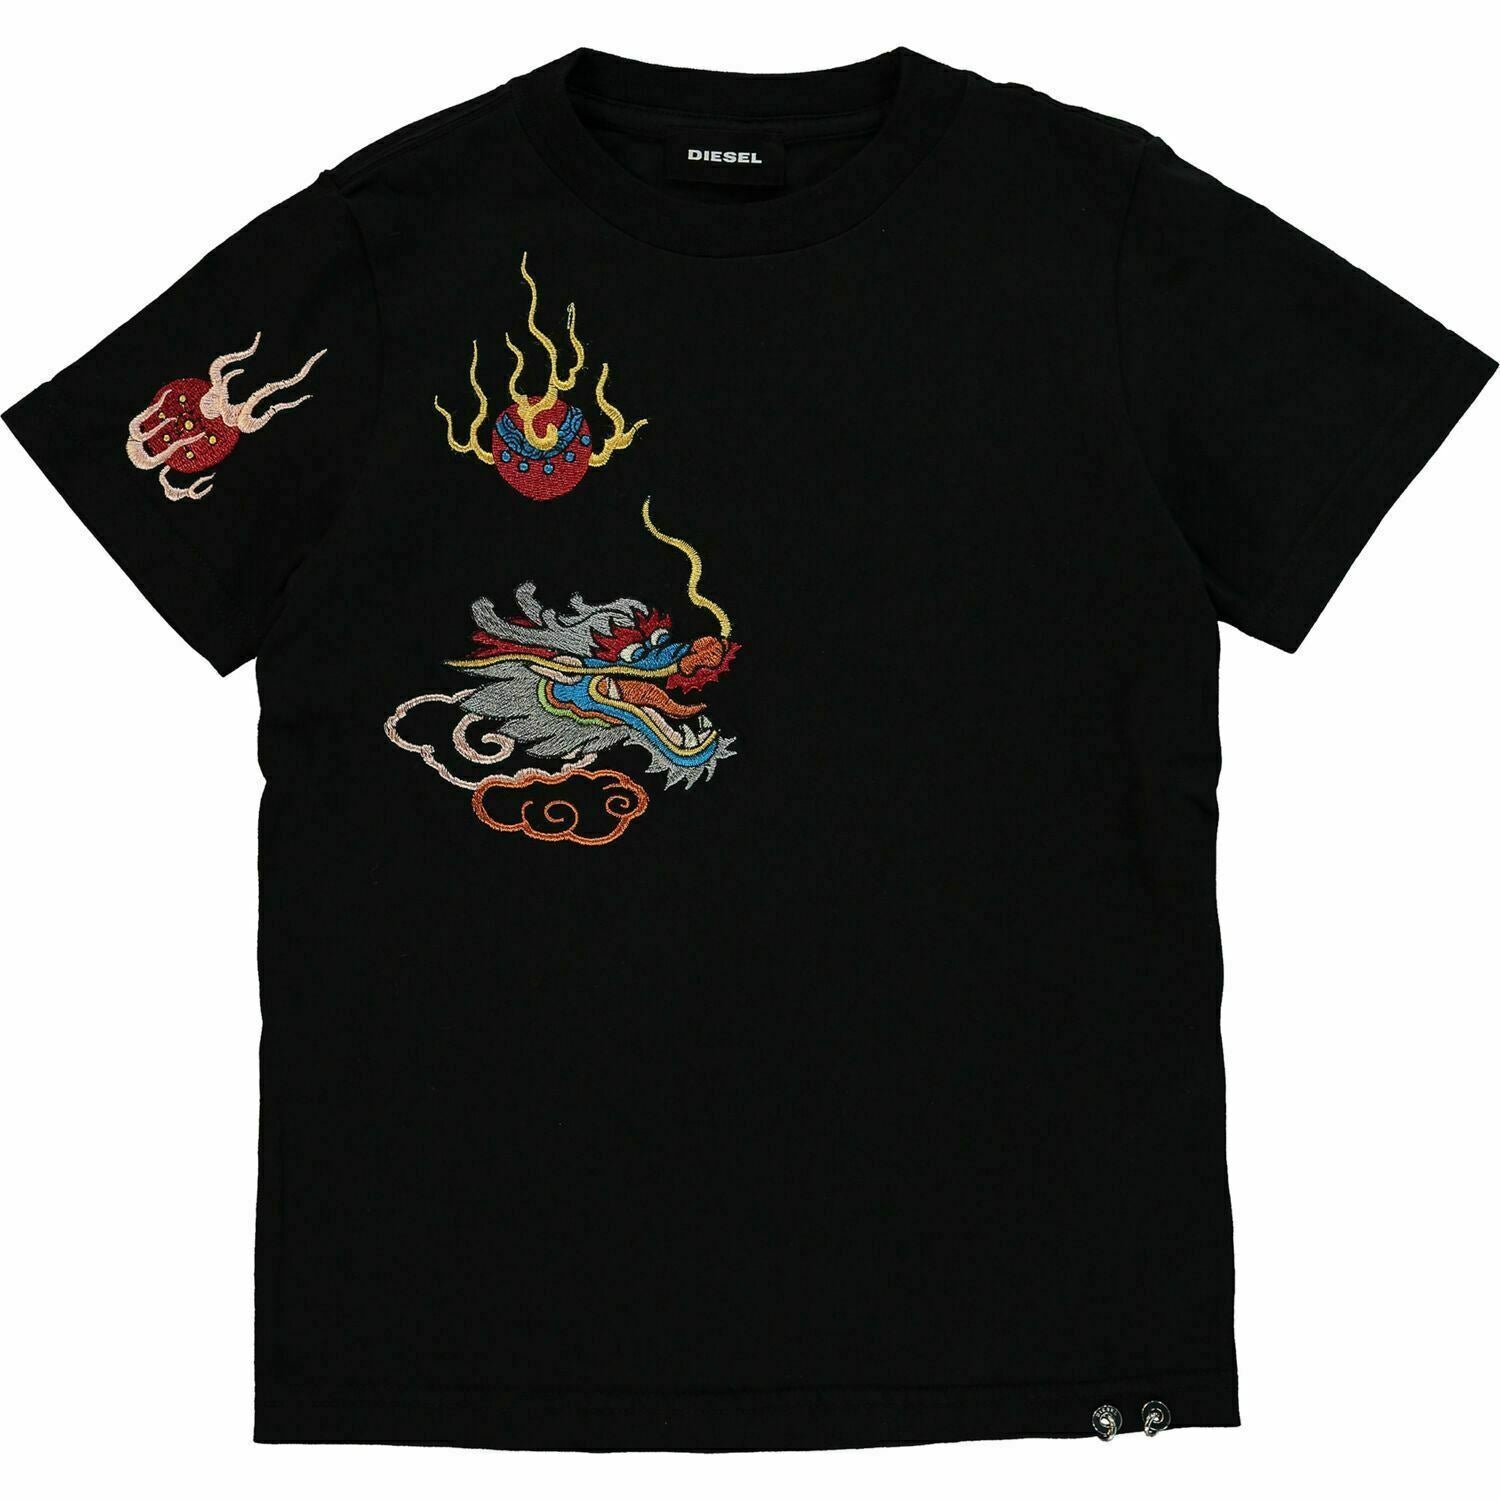 DIESEL Girls' Kids' T-DARIA Dragon Embroidery T-shirt, Black, size 6 years